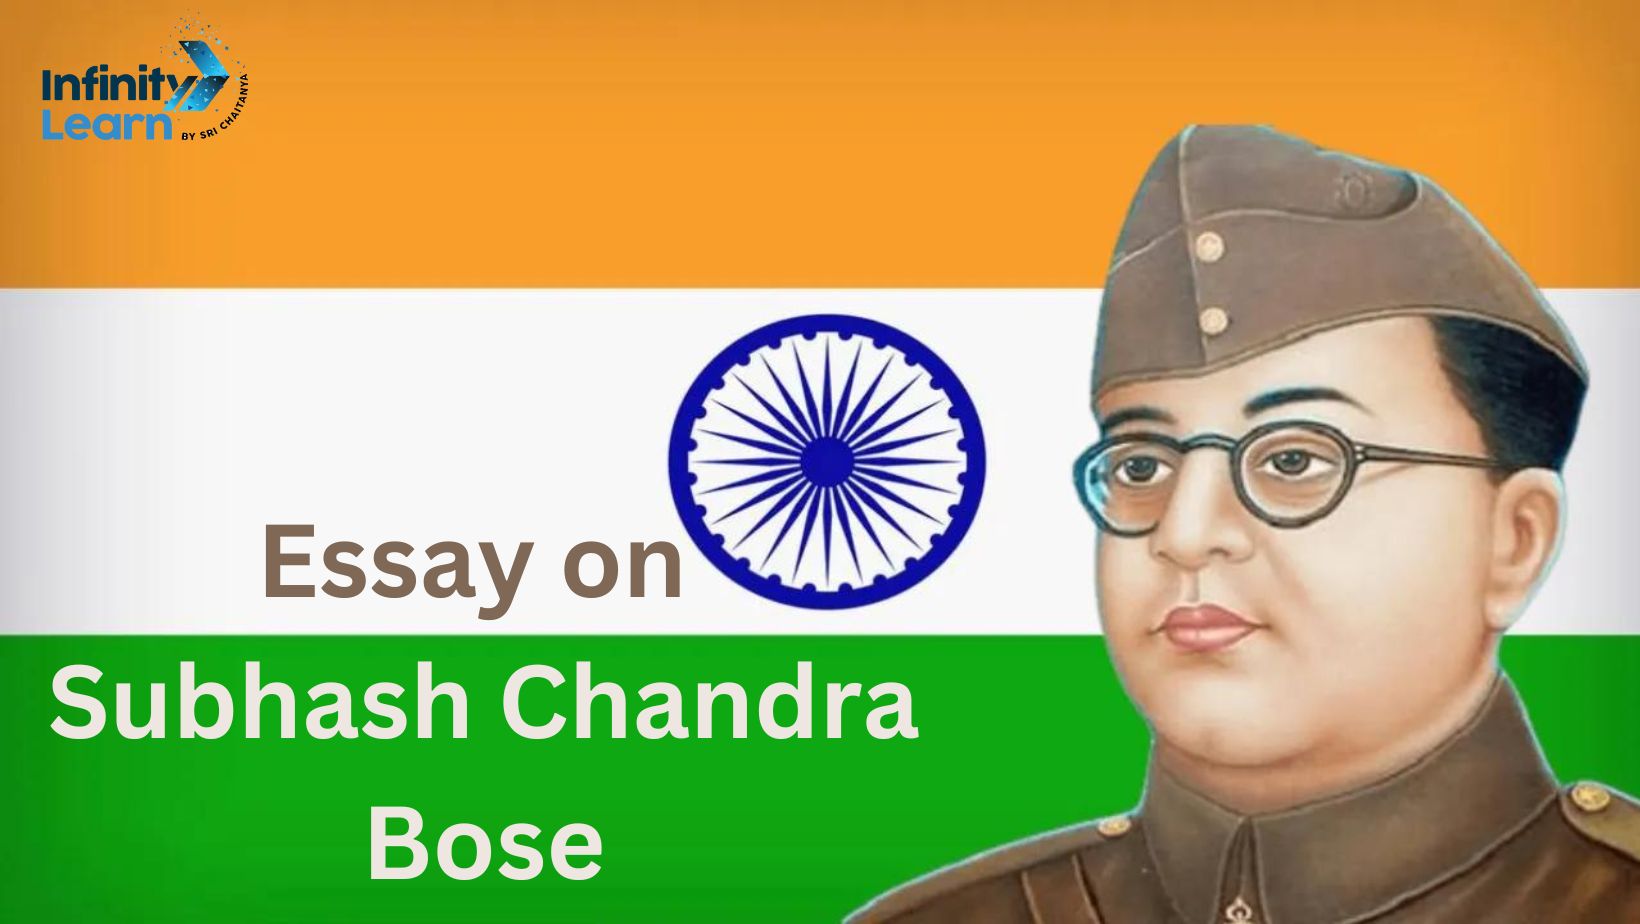 Essay on Subhash Chandra Bose